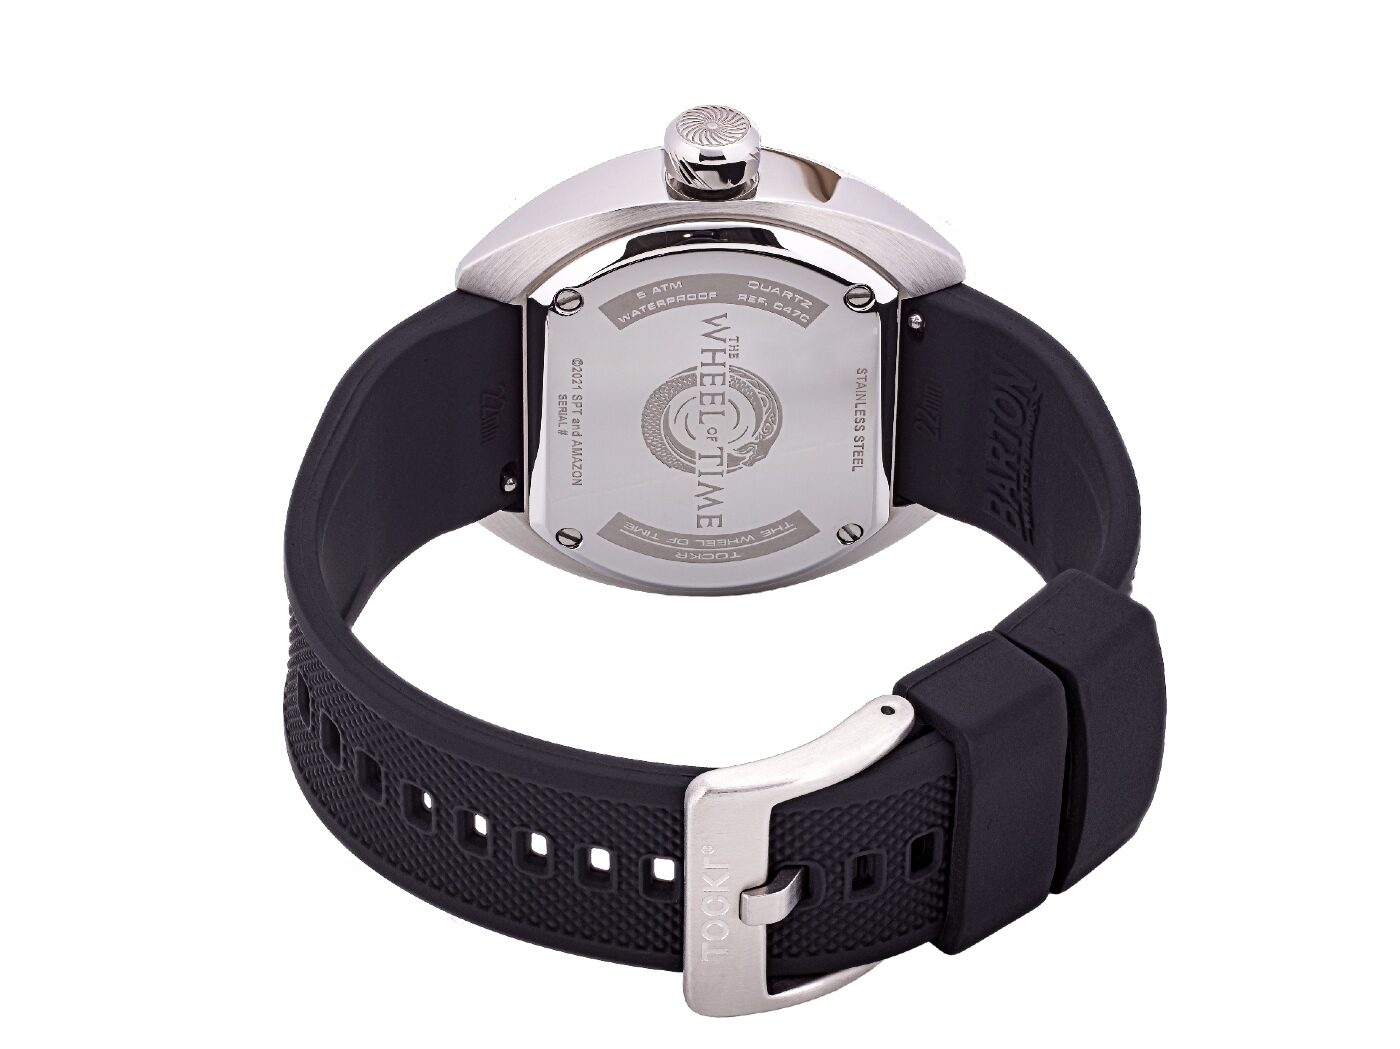 Tockr Wheel of Time watch engraved caseback strap